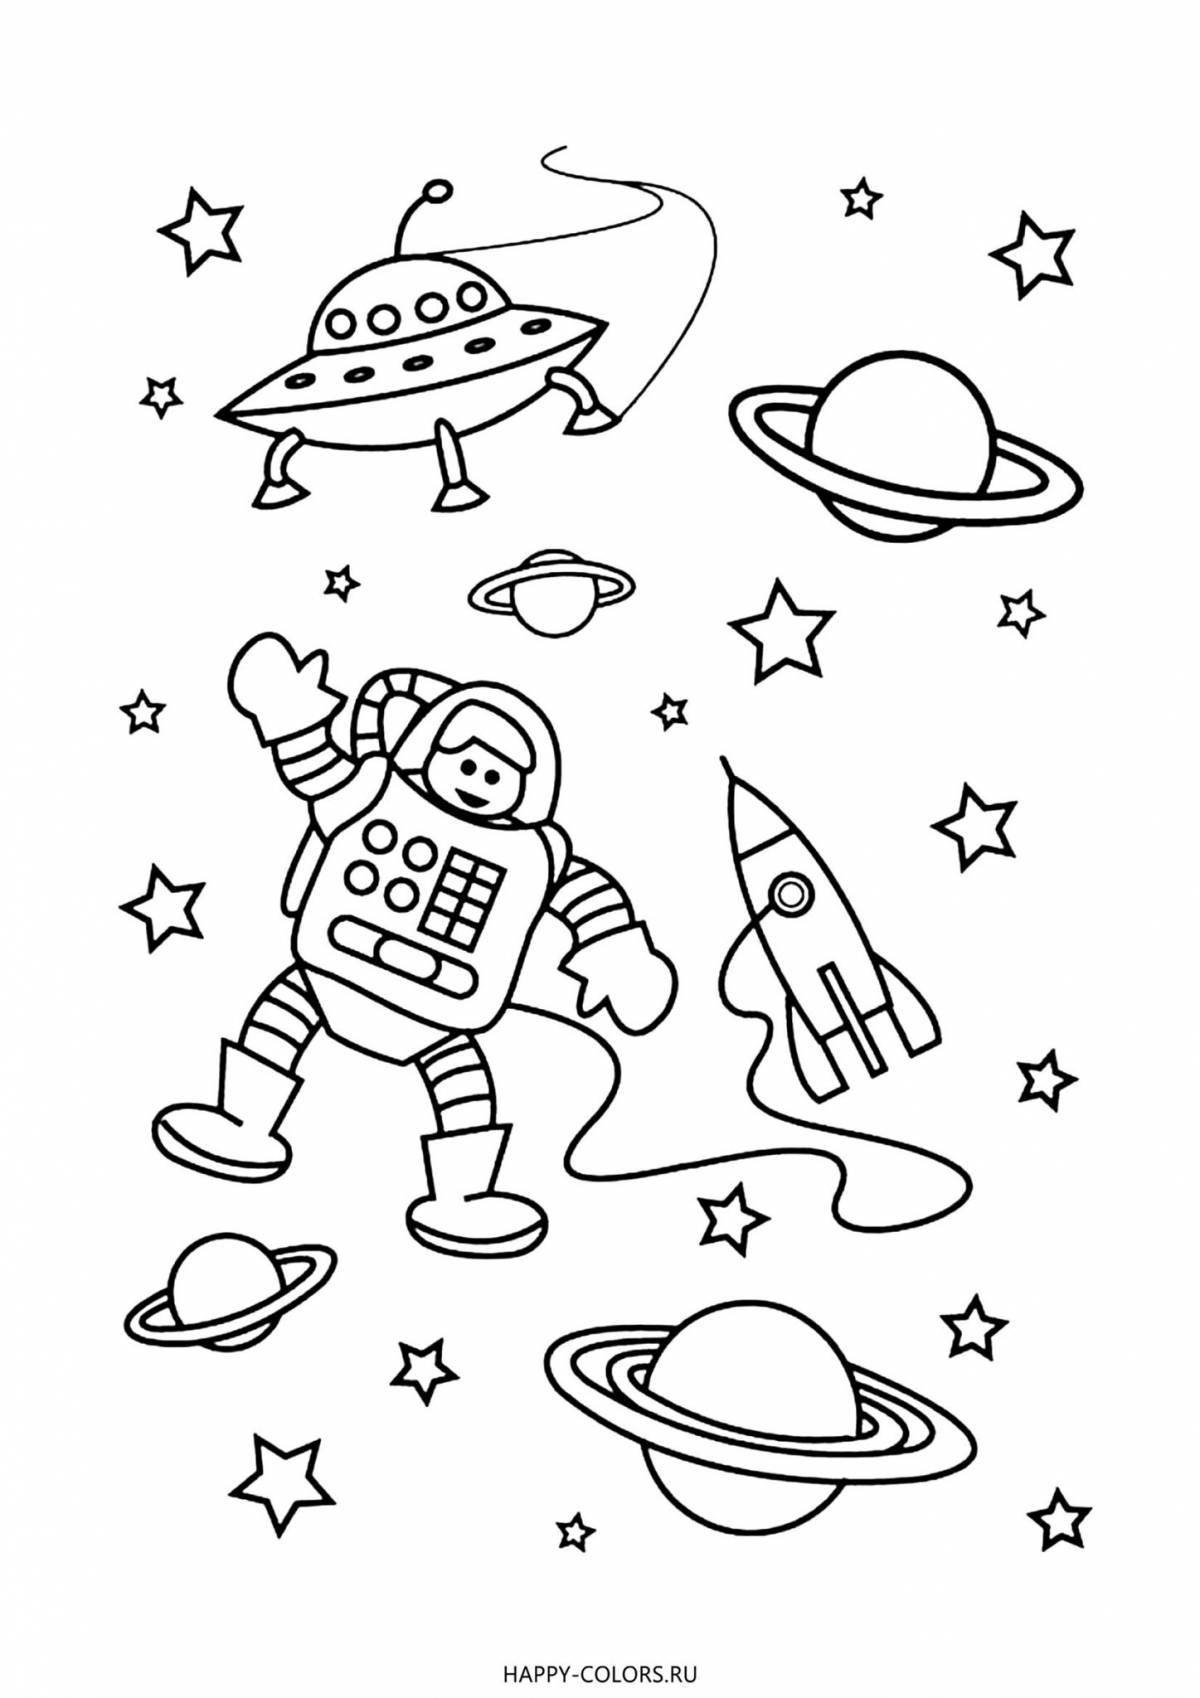 Brilliant astronaut with satellite coloring book